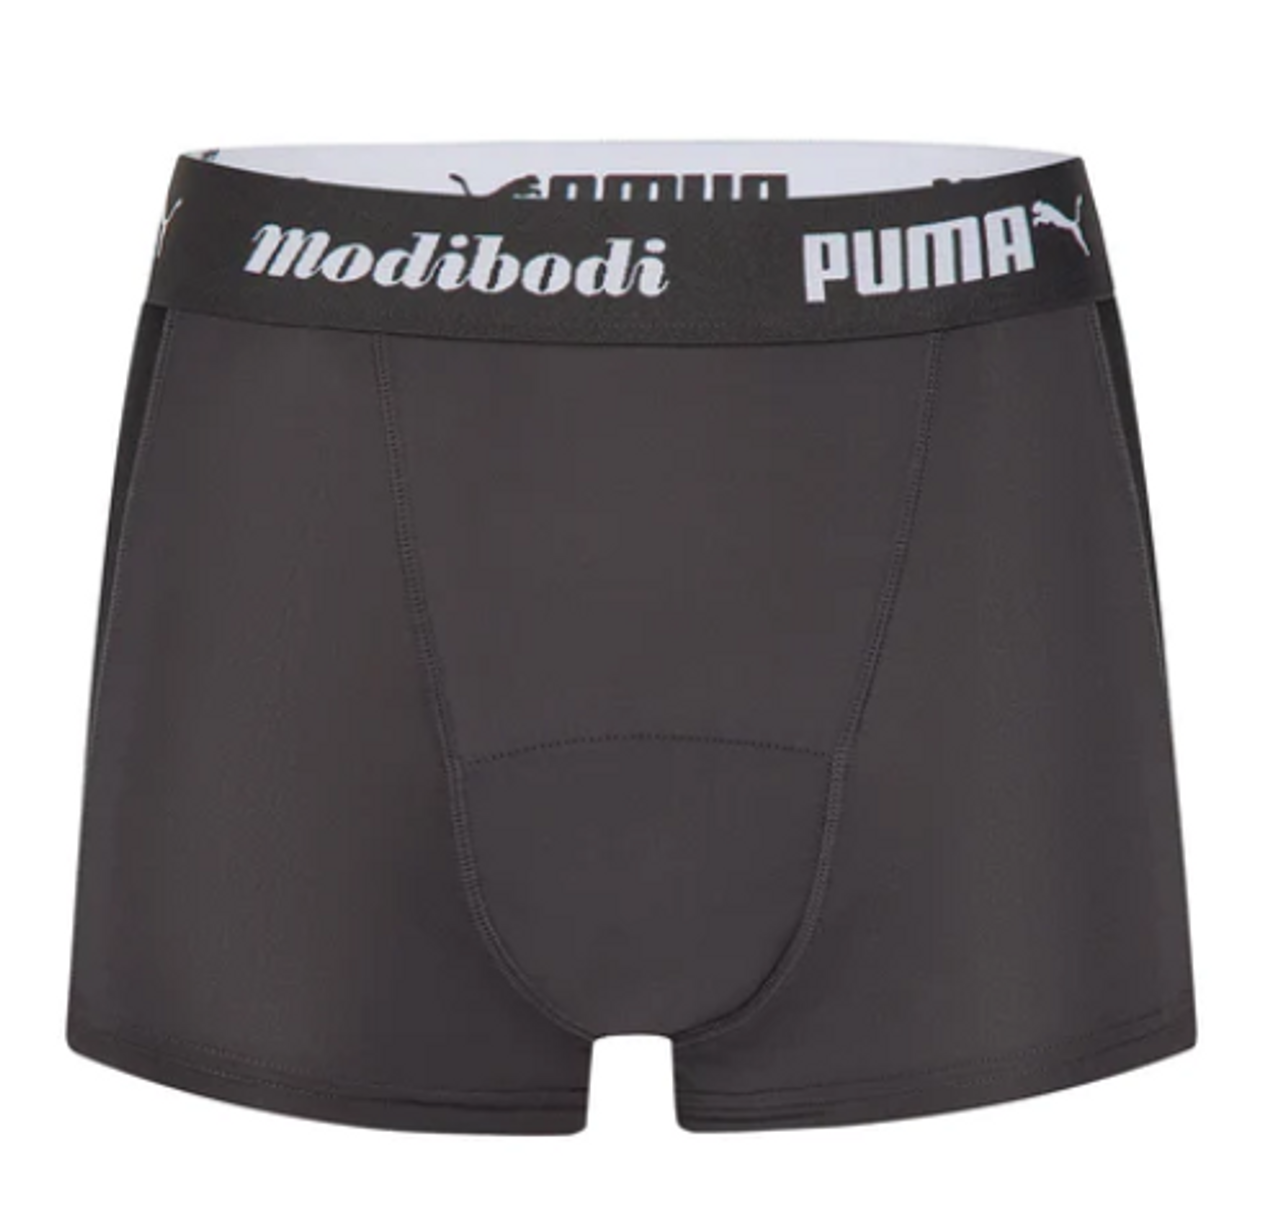 PUMA x Modibodi Active Brief (Moderate-Heavy), Black, Puma